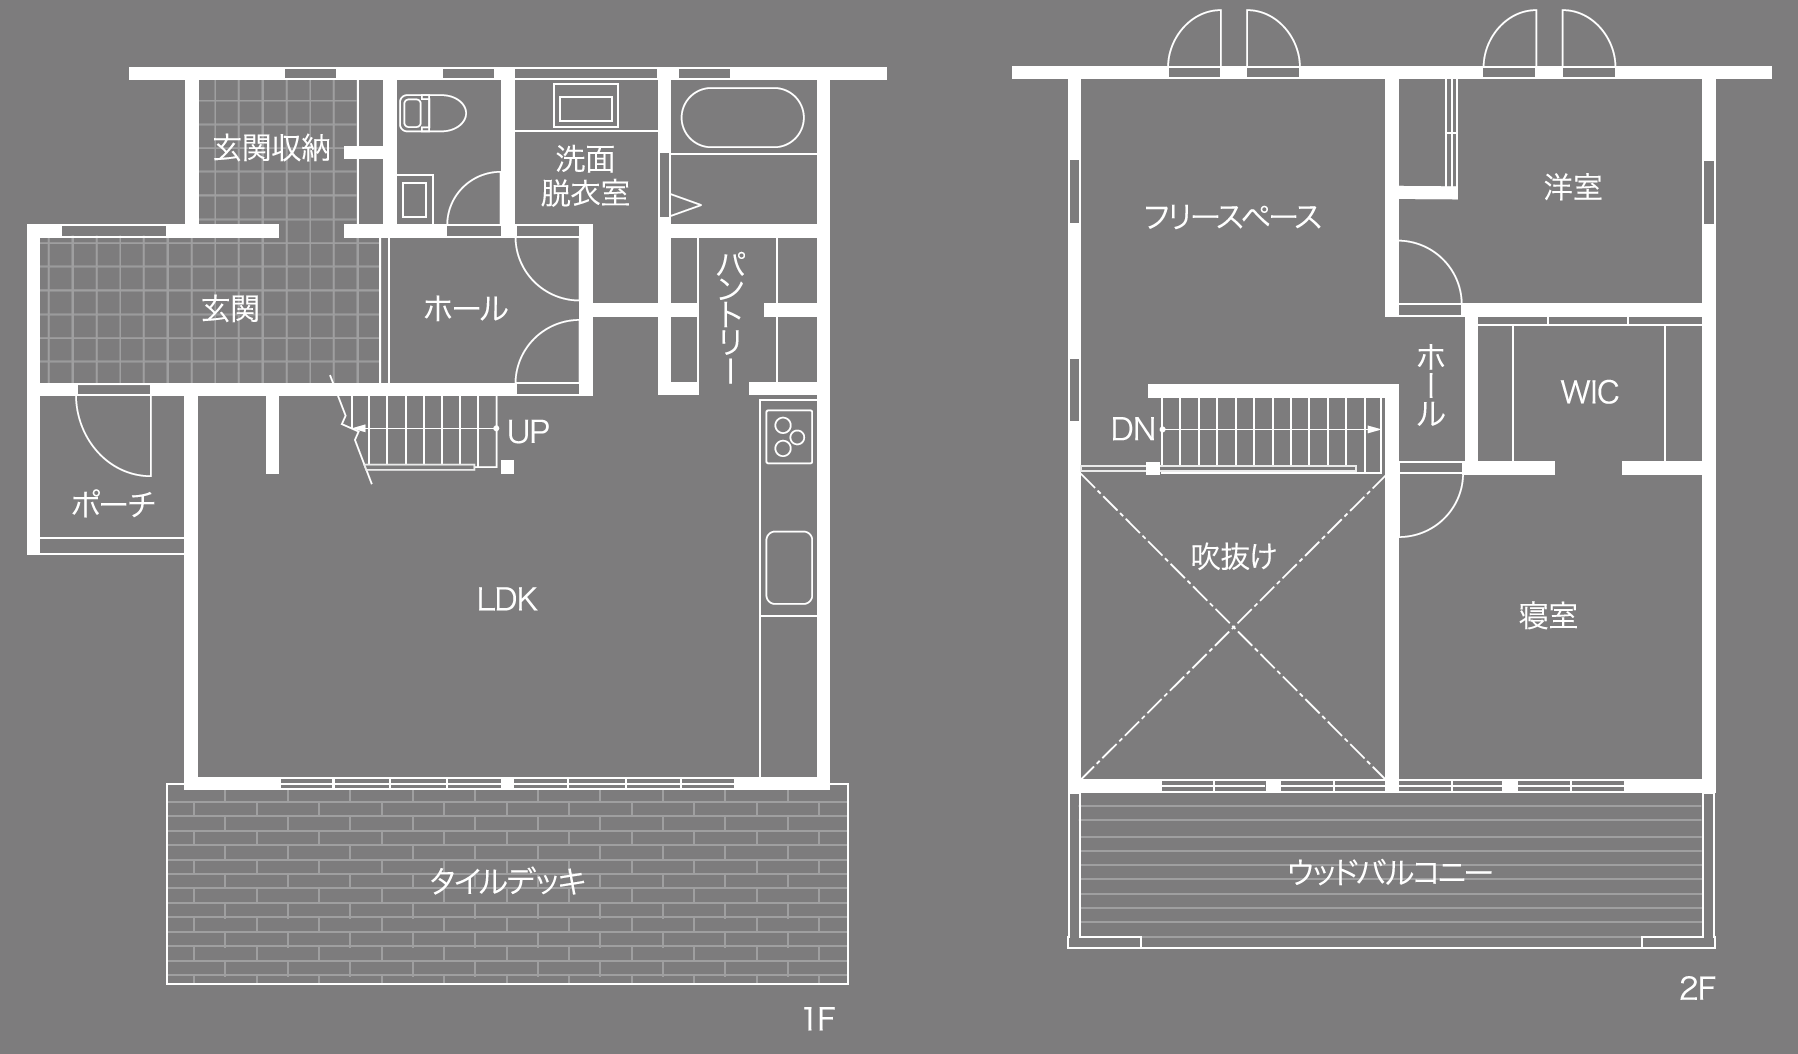 glamp 間取り図 モデルプラン3 栃木県宇都宮市で注文住宅を手掛ける NEXT HAUS DESIGN／ネクストハウスデザインの商品紹介